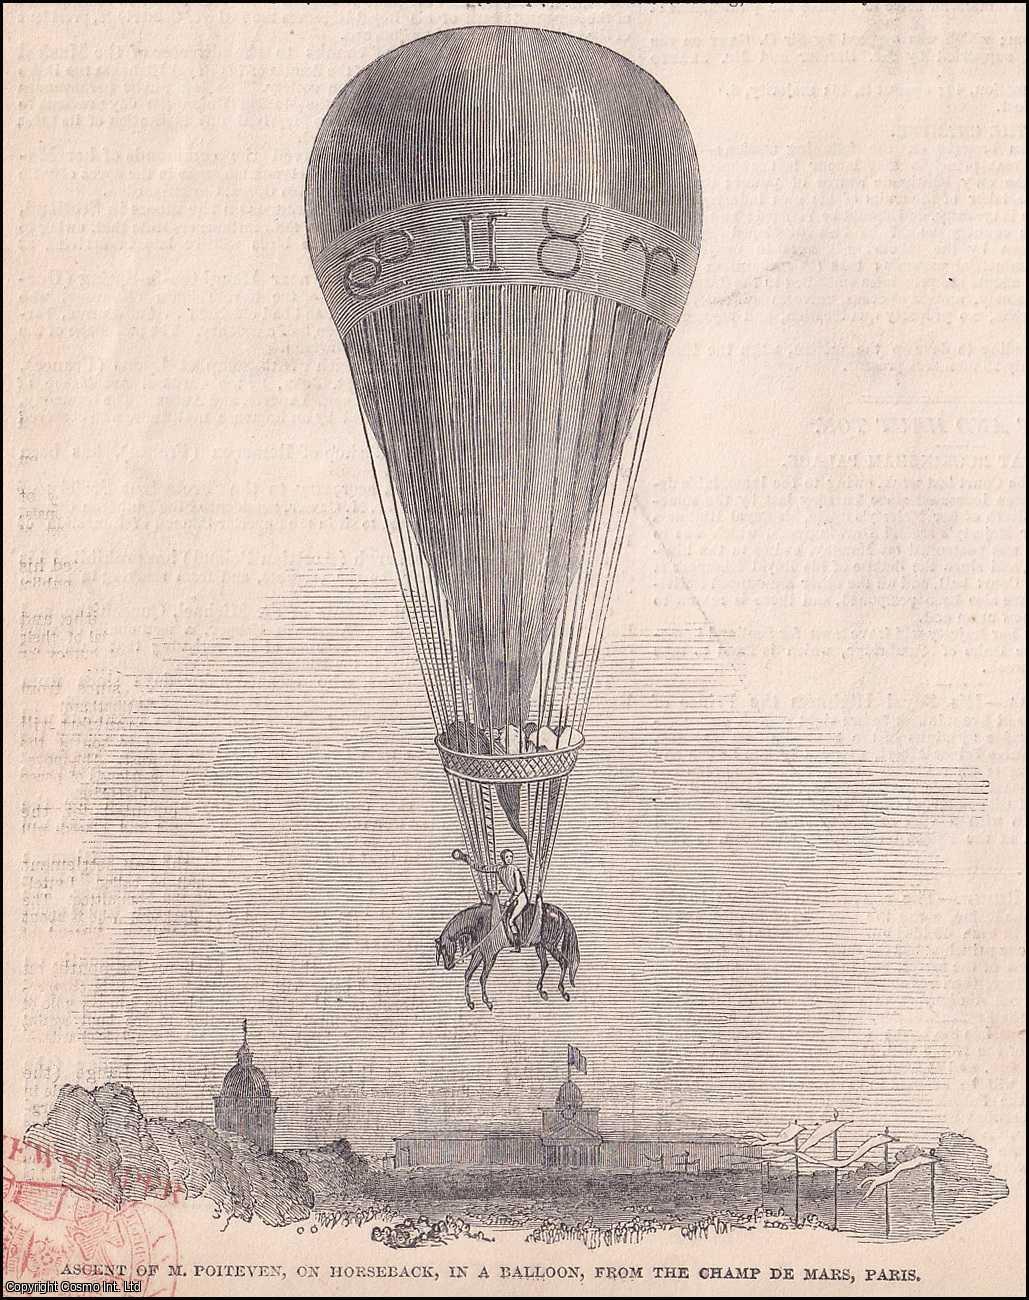 BALLOONING - Mr Poiteven's horseback balloon ascent, Champ de Mars, Paris. An original print from the Illustrated London News, 1850.